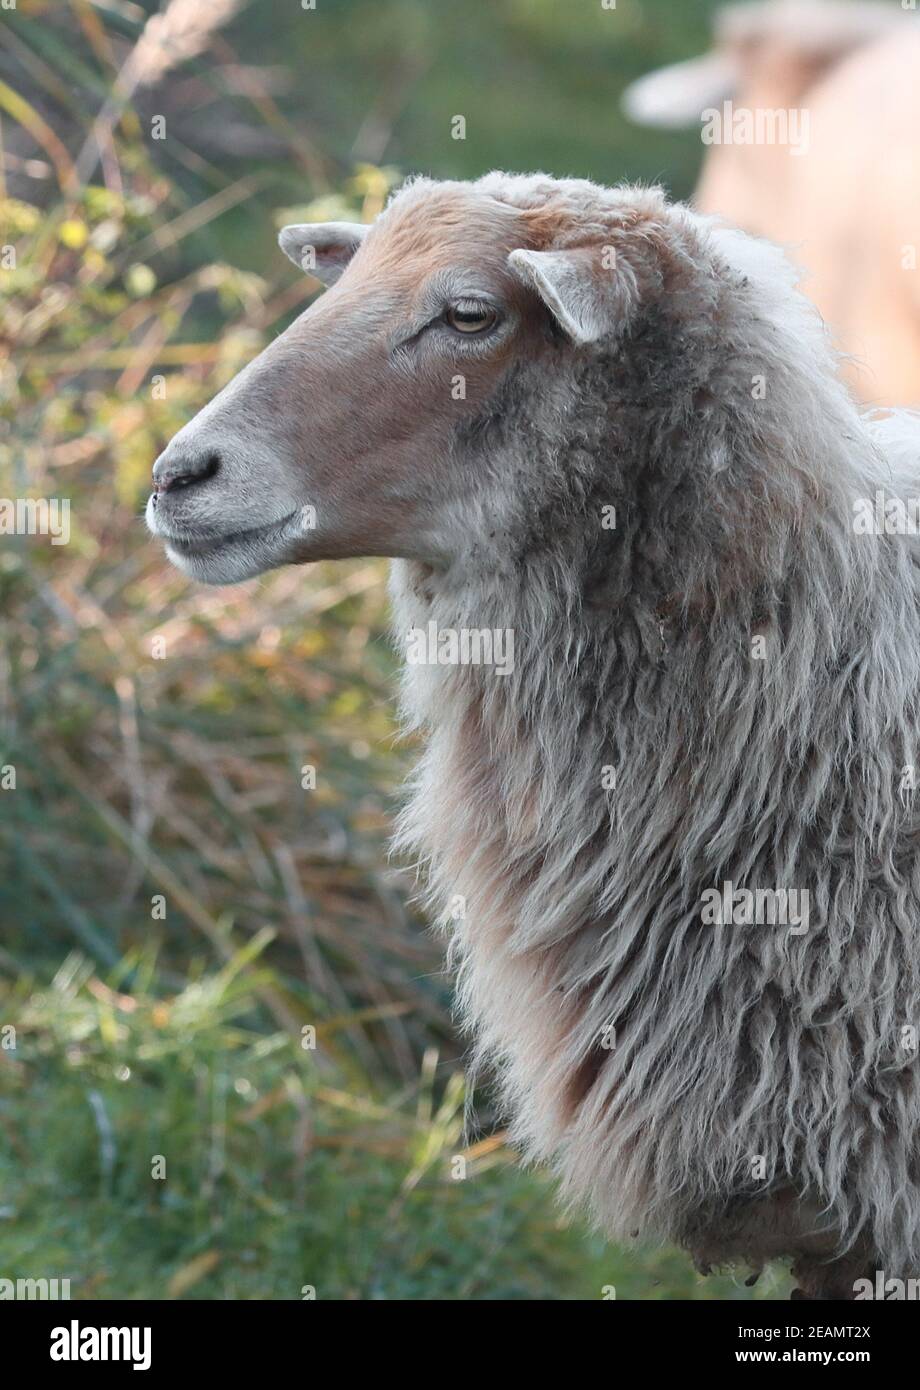 Sheep animal portrait. Stock Photo